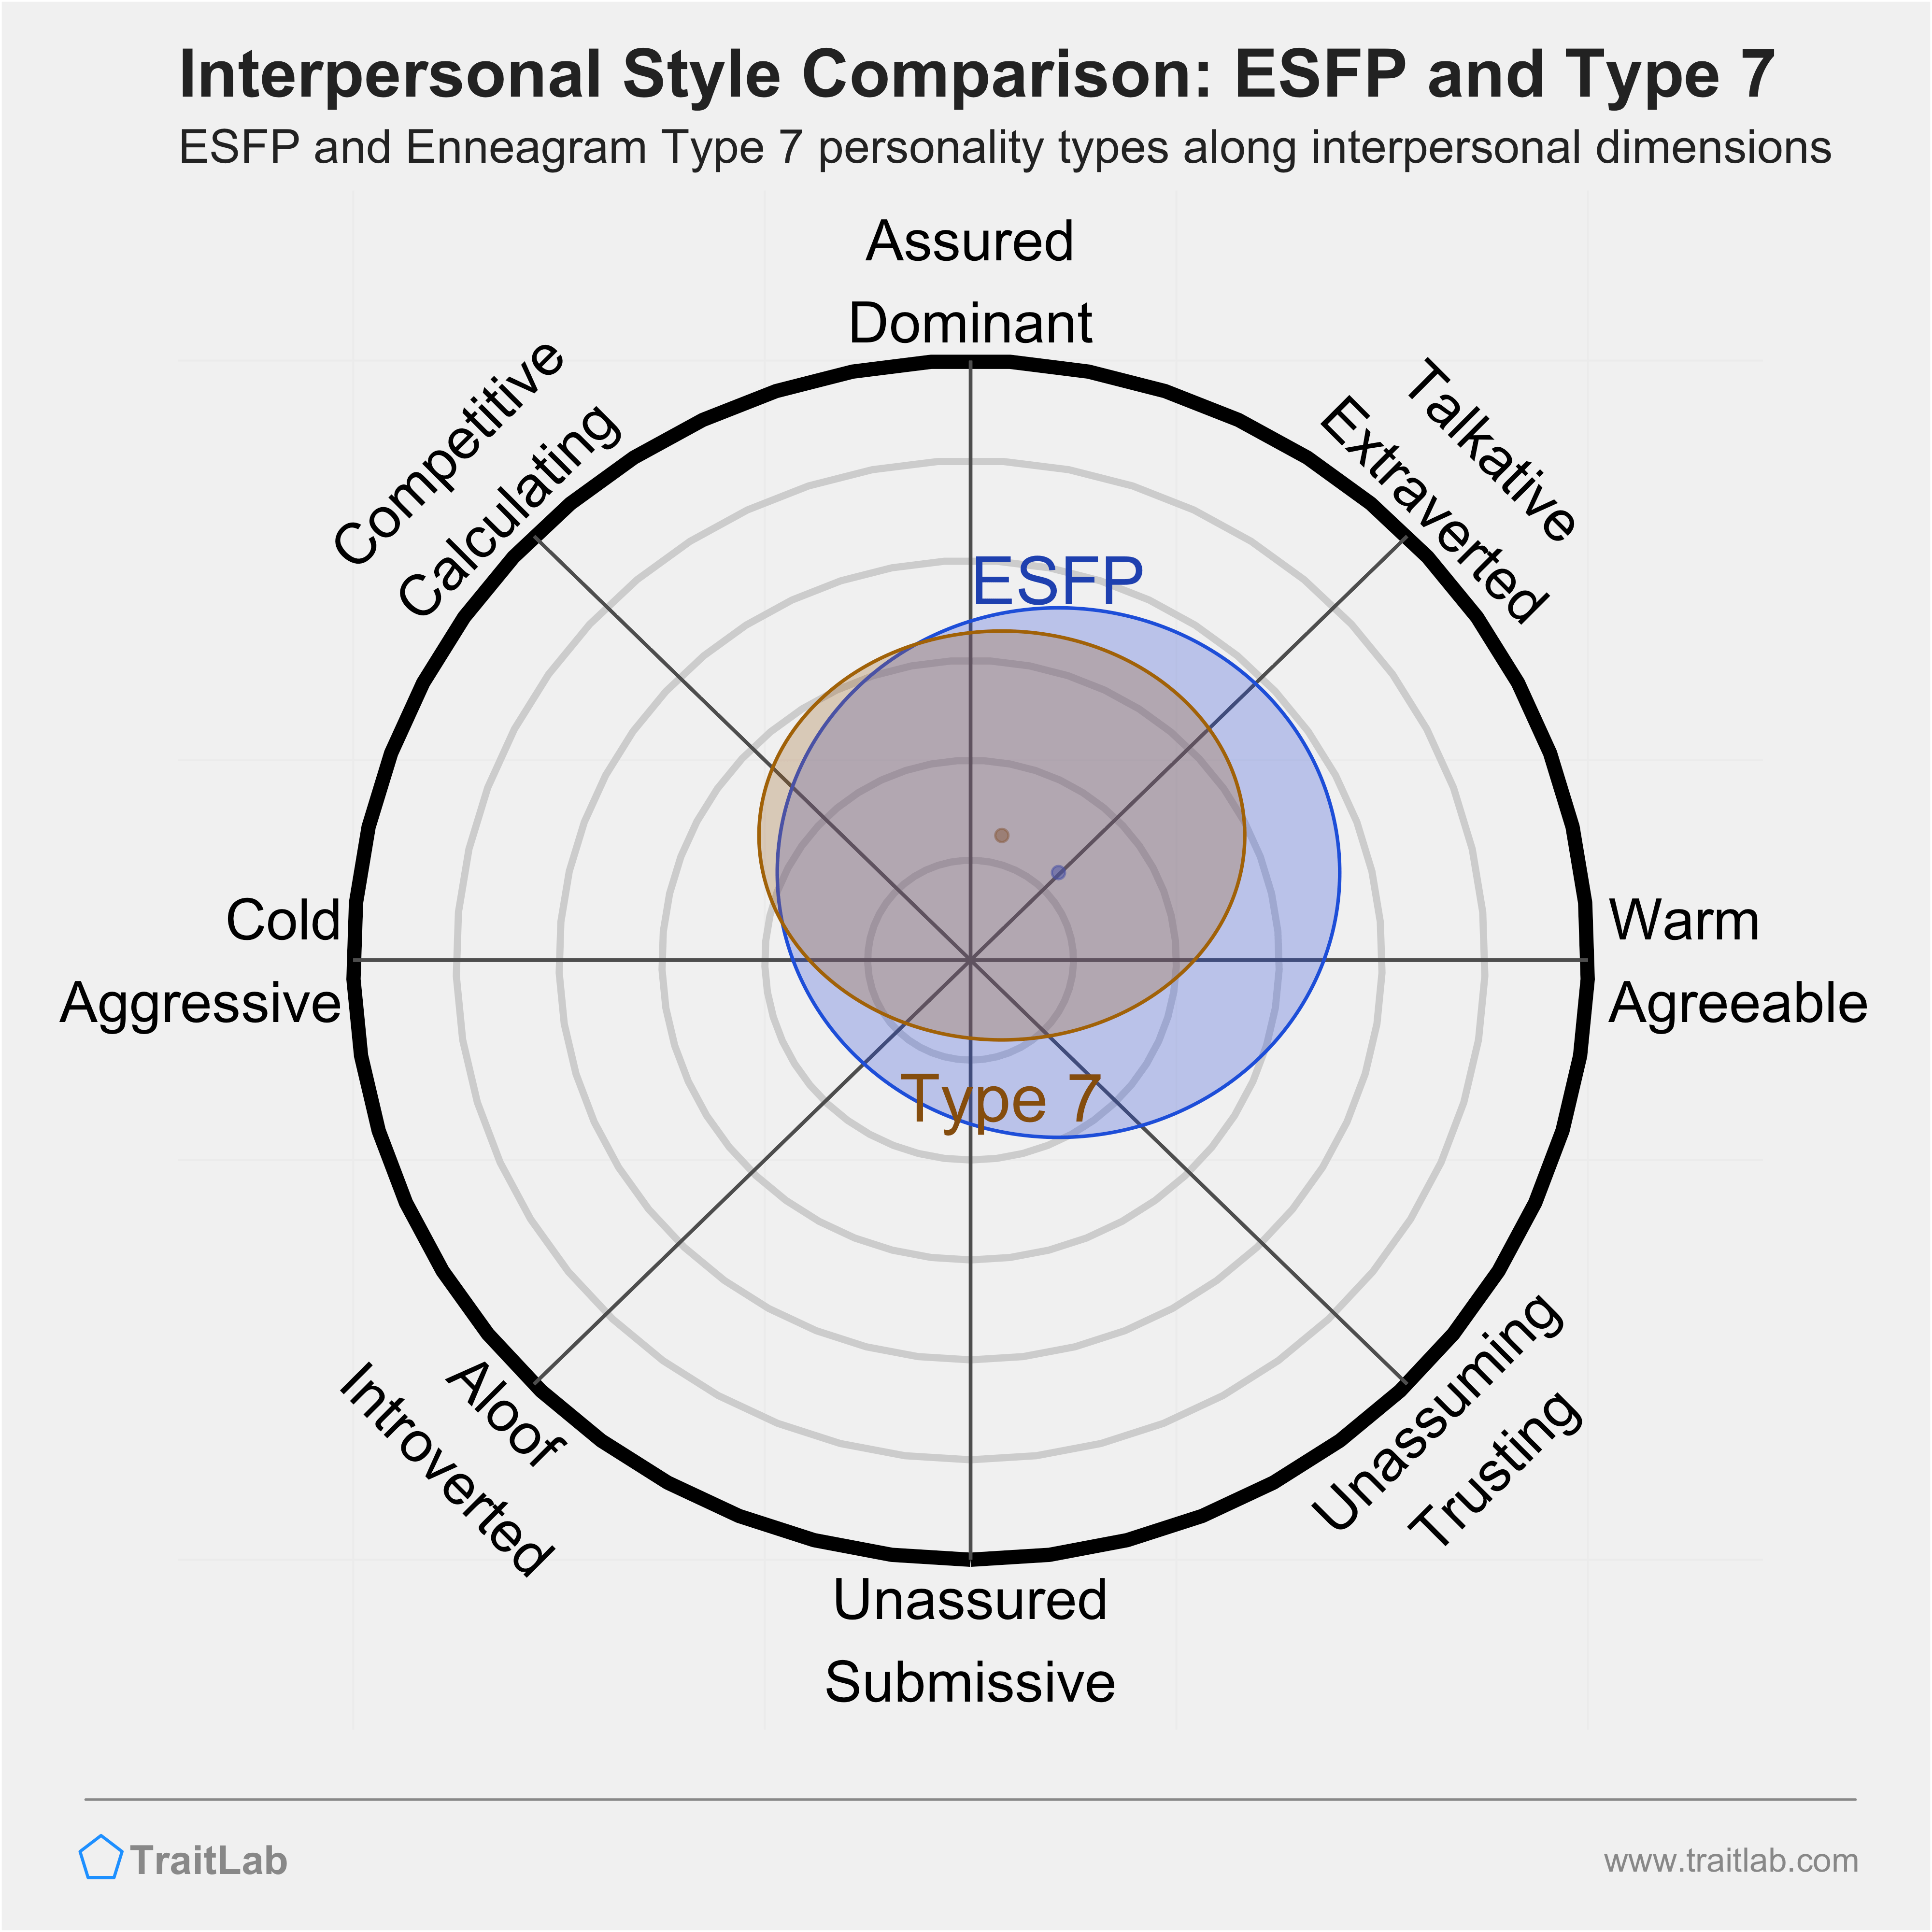 Enneagram ESFP and Type 7 comparison across interpersonal dimensions